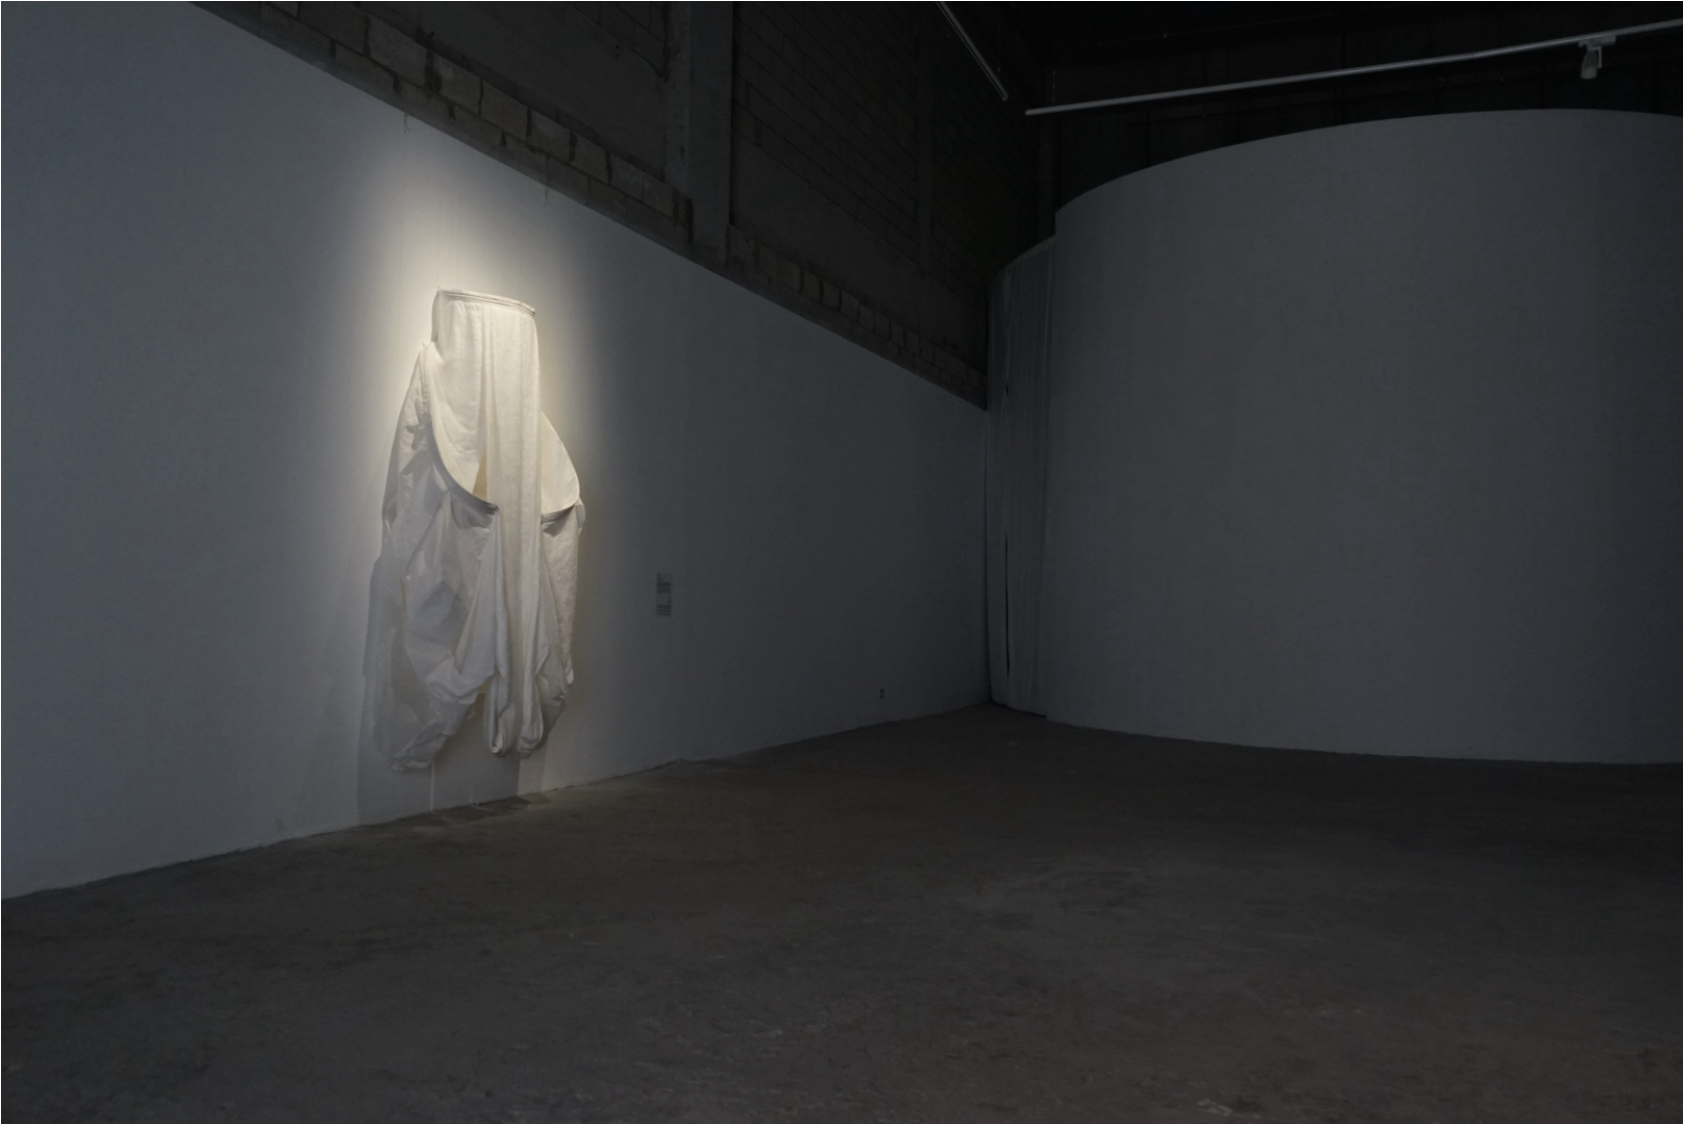 Oeuvre de Filwa Nazer de son exposition In the fold. Tissu clair suspendu dans une salle sombre